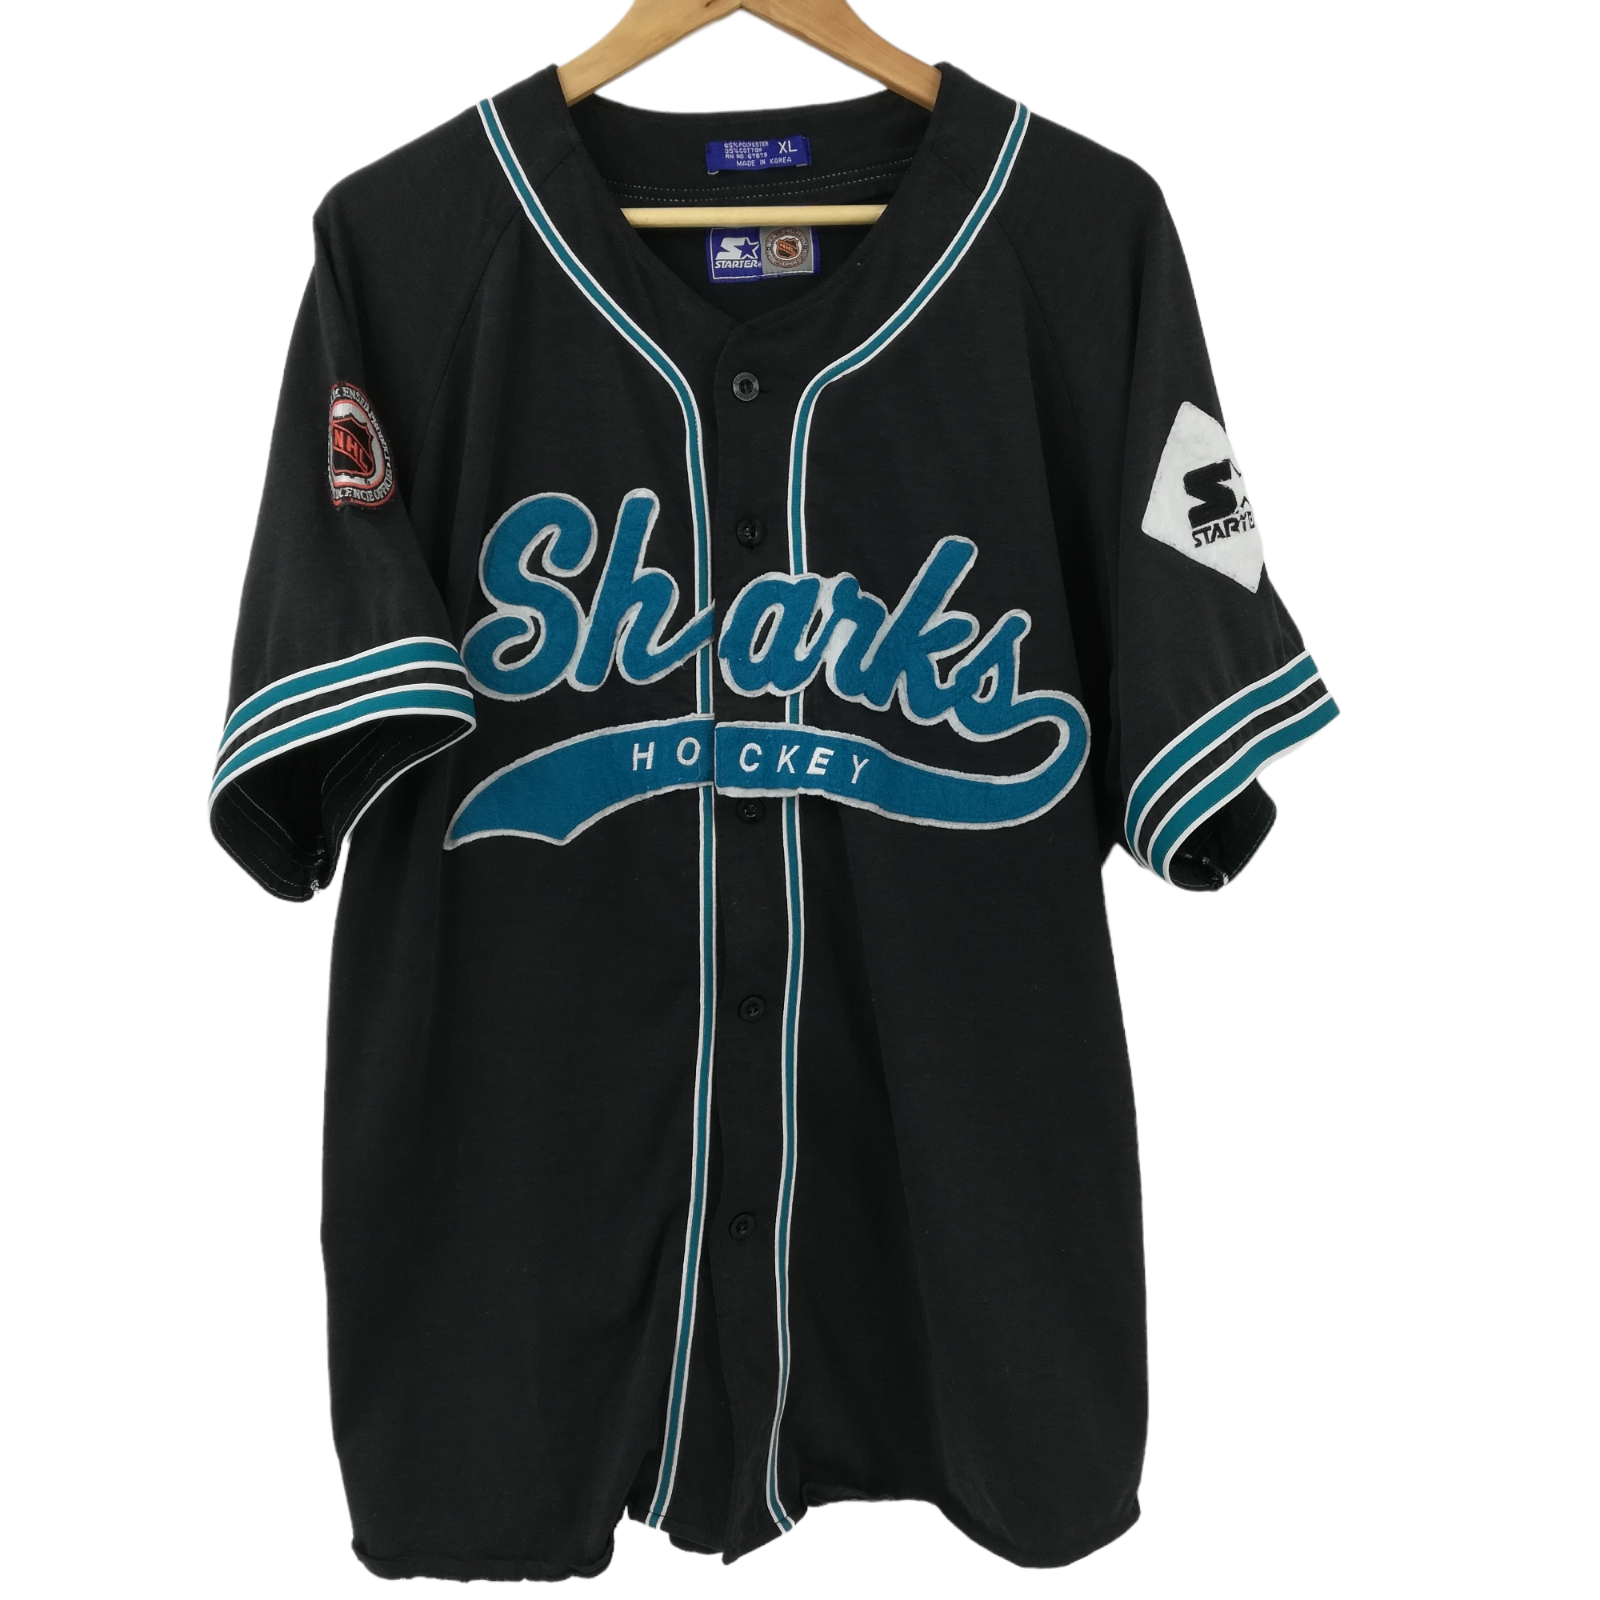 Vintage 1990's Team Nike San Jose Sharks Jersey Sz. XL